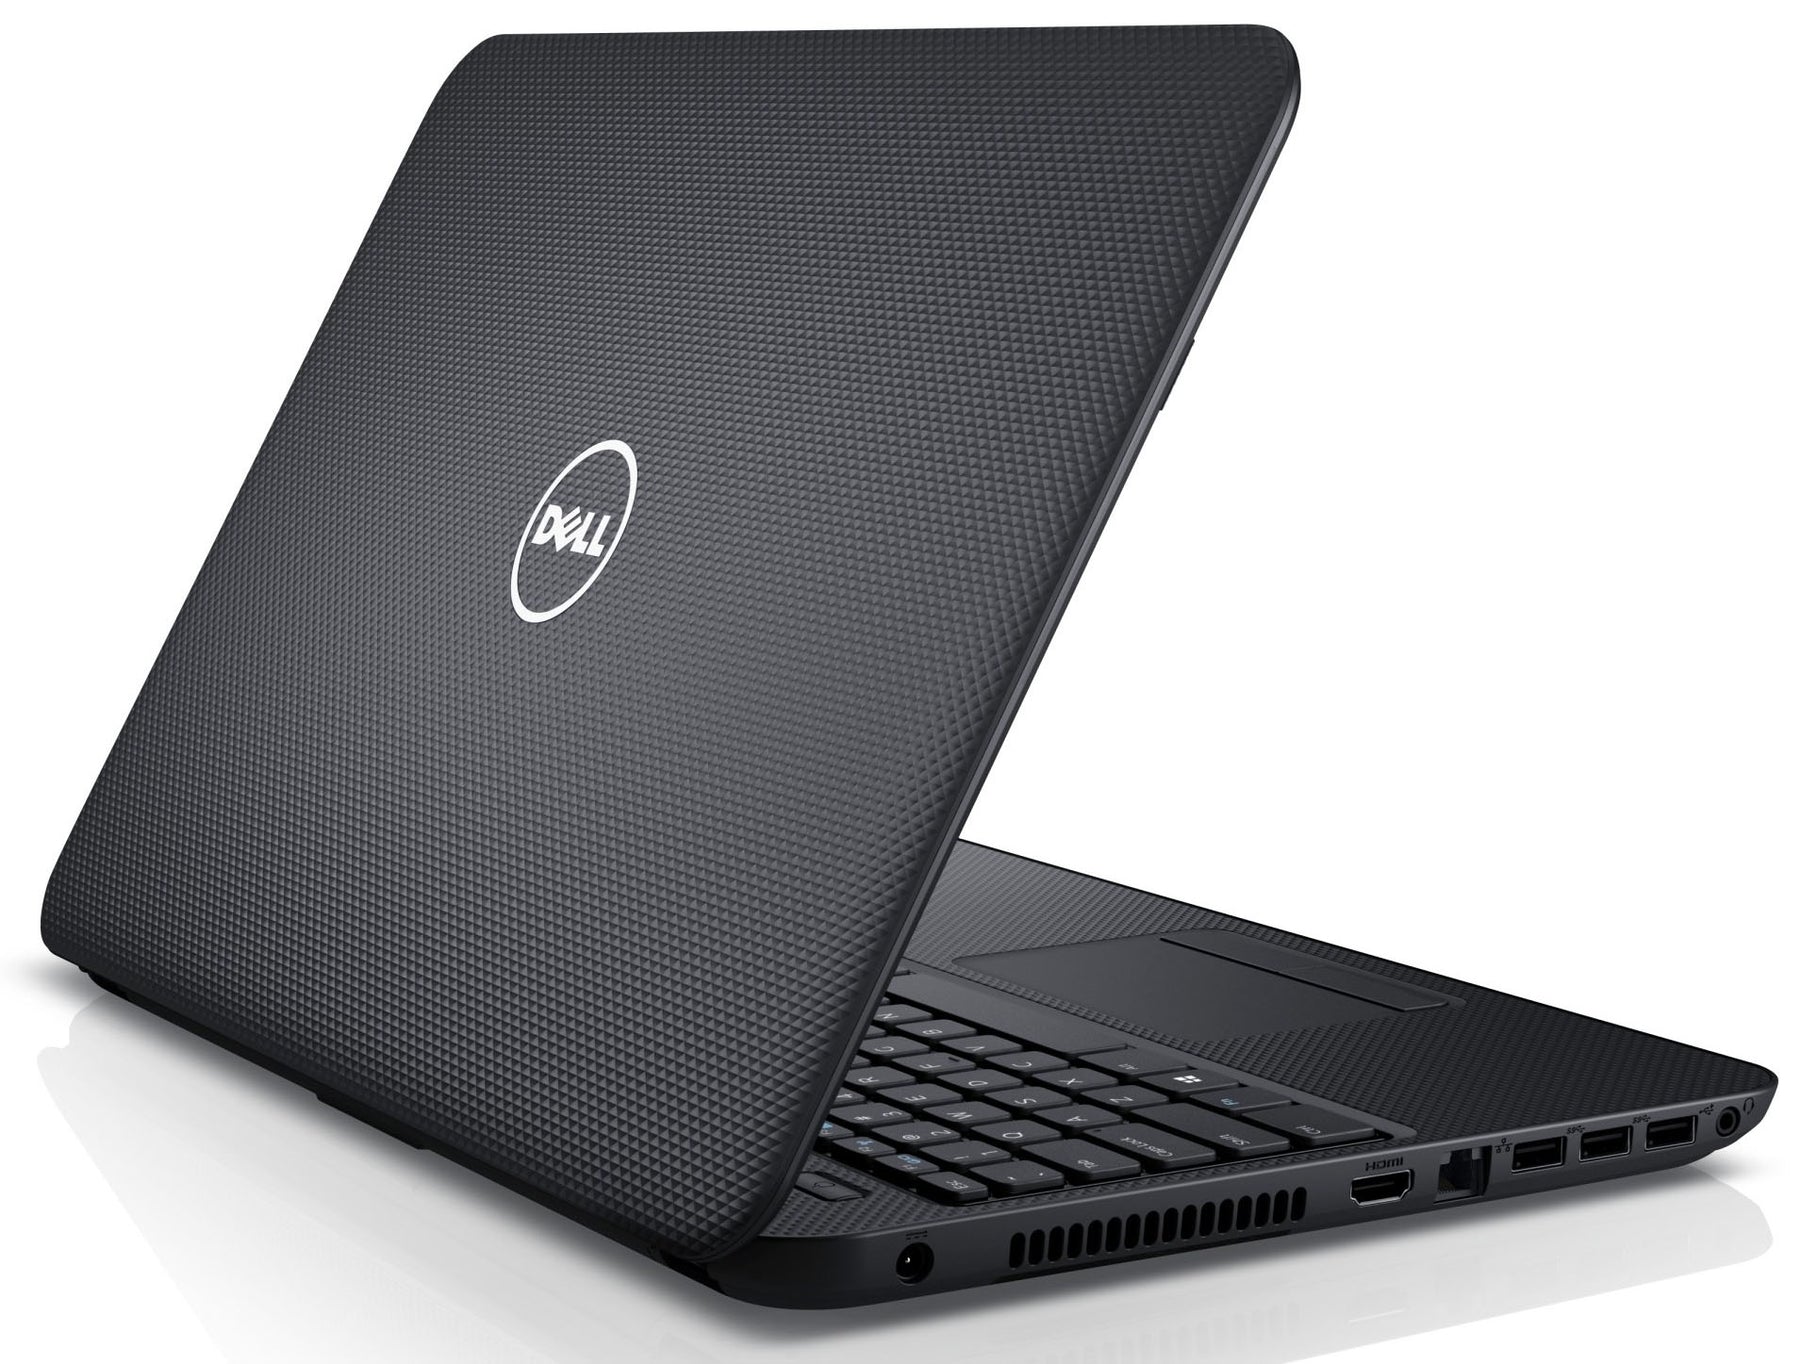 Dell Inspiron 15 Laptop i7-4500U 8GB RAM 256GB SSD - Good Condition